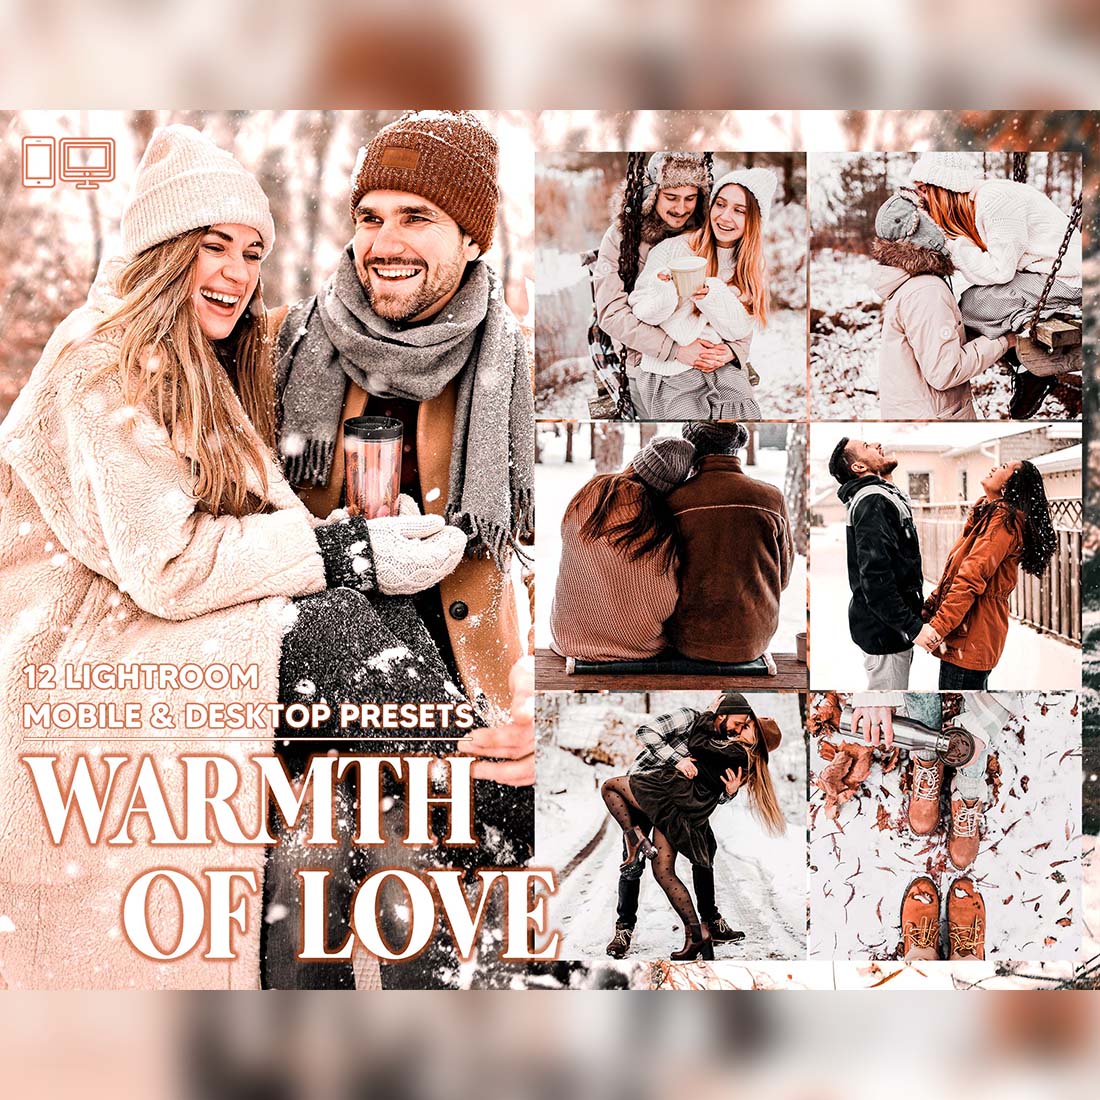 12 Warmth Of Love Lightroom Presets, Romance Mobile Preset, Winter Desktop LR Lifestyle DNG Instagram Kiss Filter Theme Portrait Season cover image.